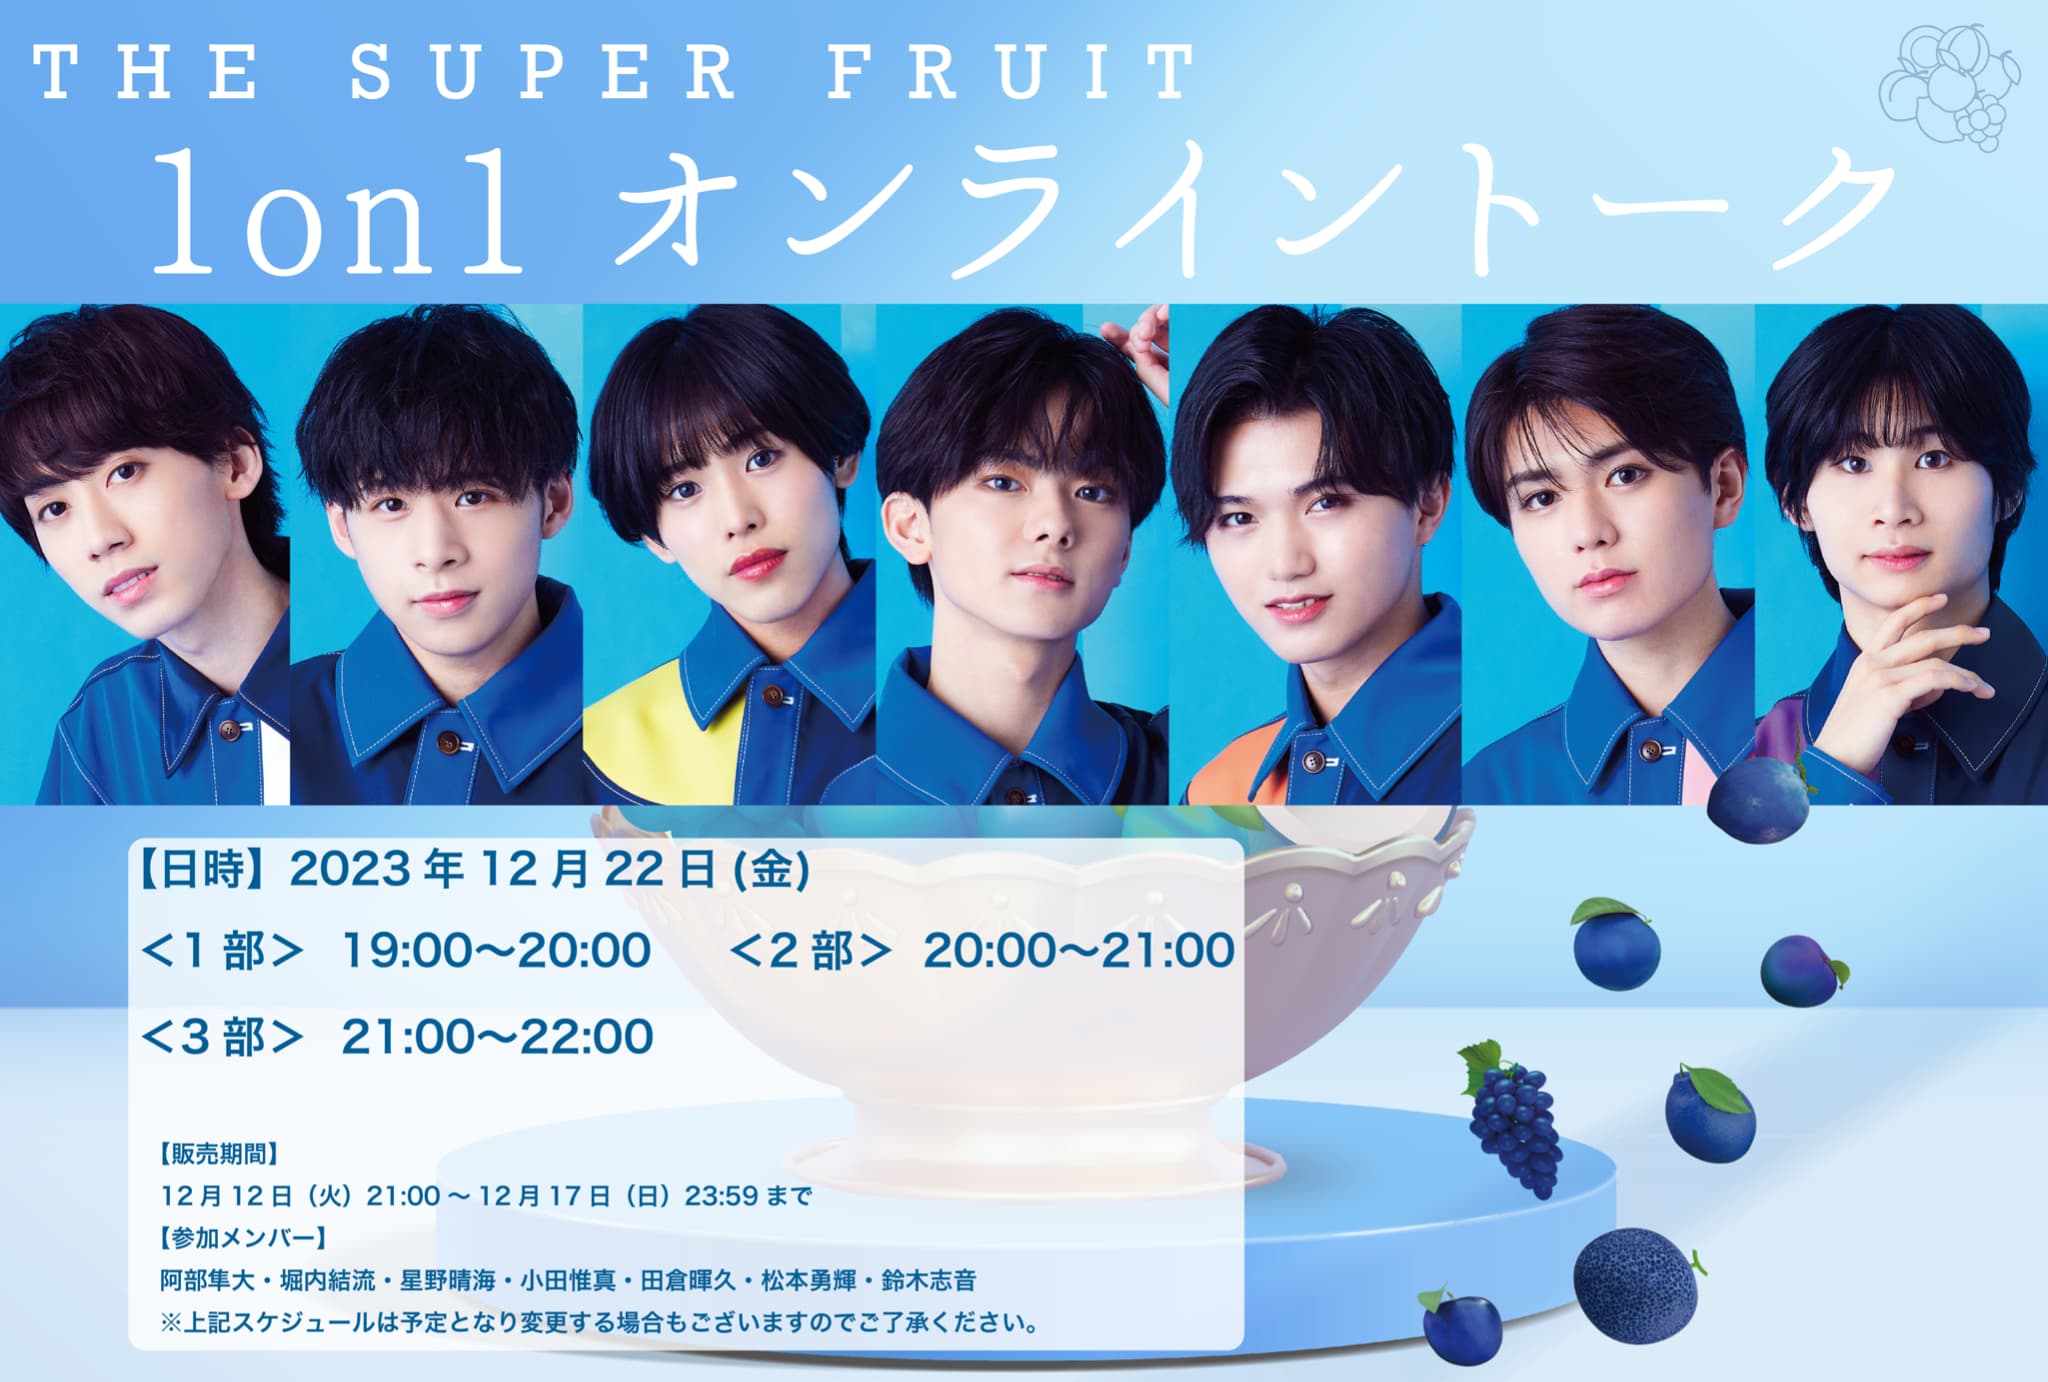 【NEWS】12月22(金) 開催！THE SUPER FRUIT 1st ALBUM「青い果実」リリース記念1on1オンライントーク会開催決定！